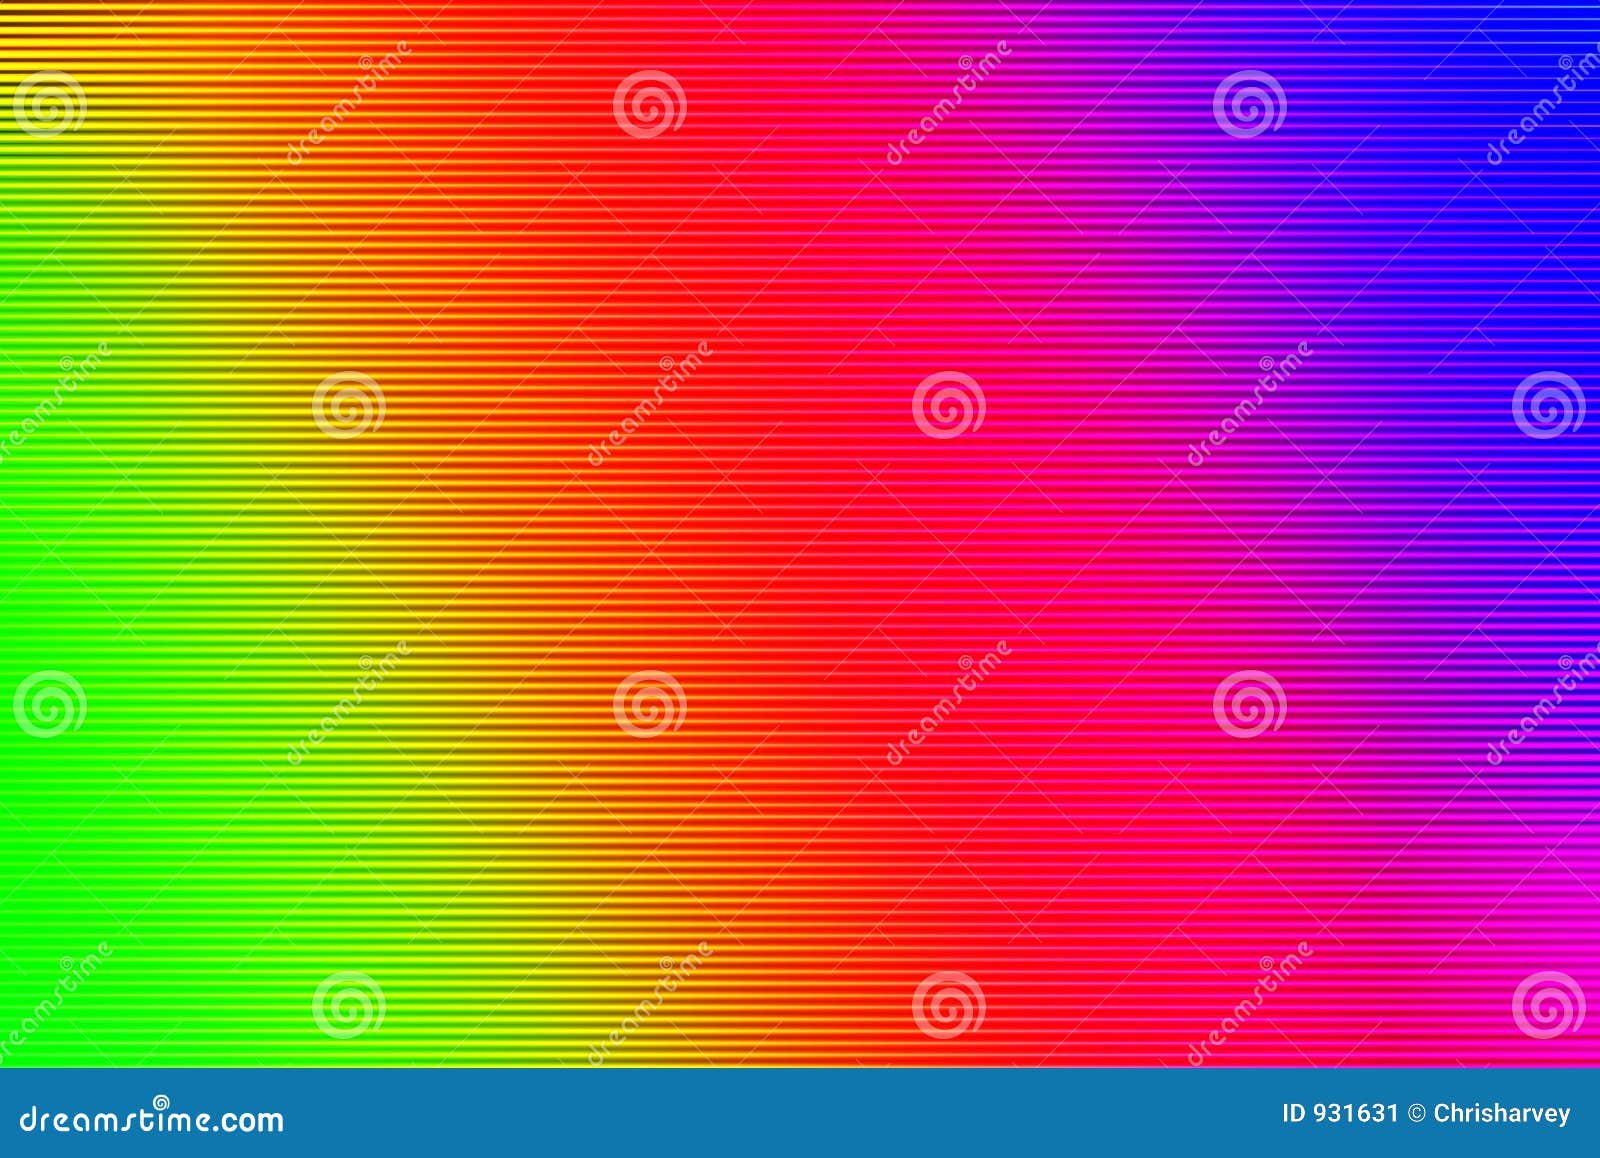 1000 Color Background Pictures  Download Free Images on Unsplash